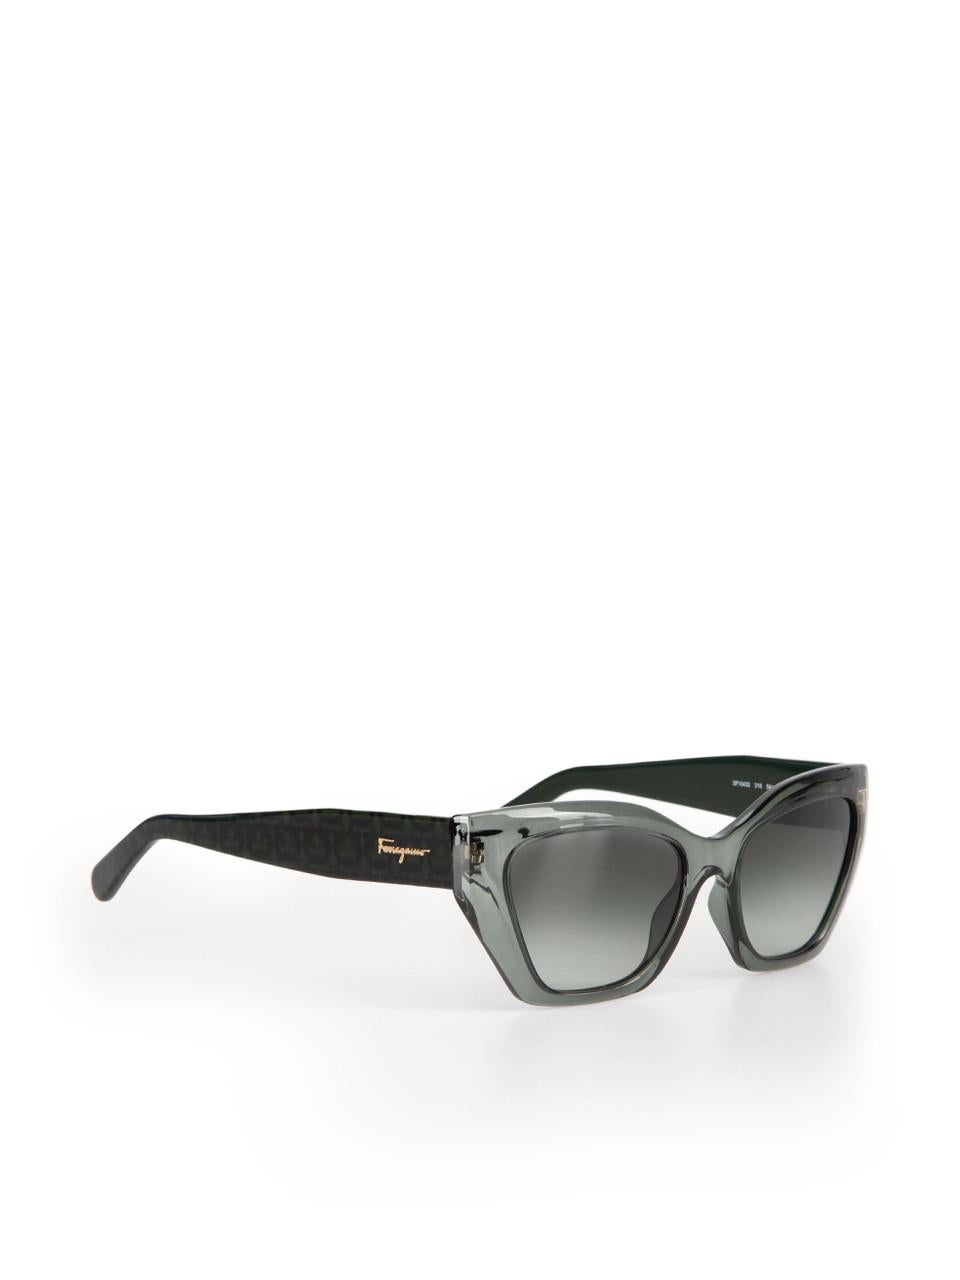 Salvatore Ferragamo Forest Green Transparent Sunglasses In New Condition For Sale In London, GB